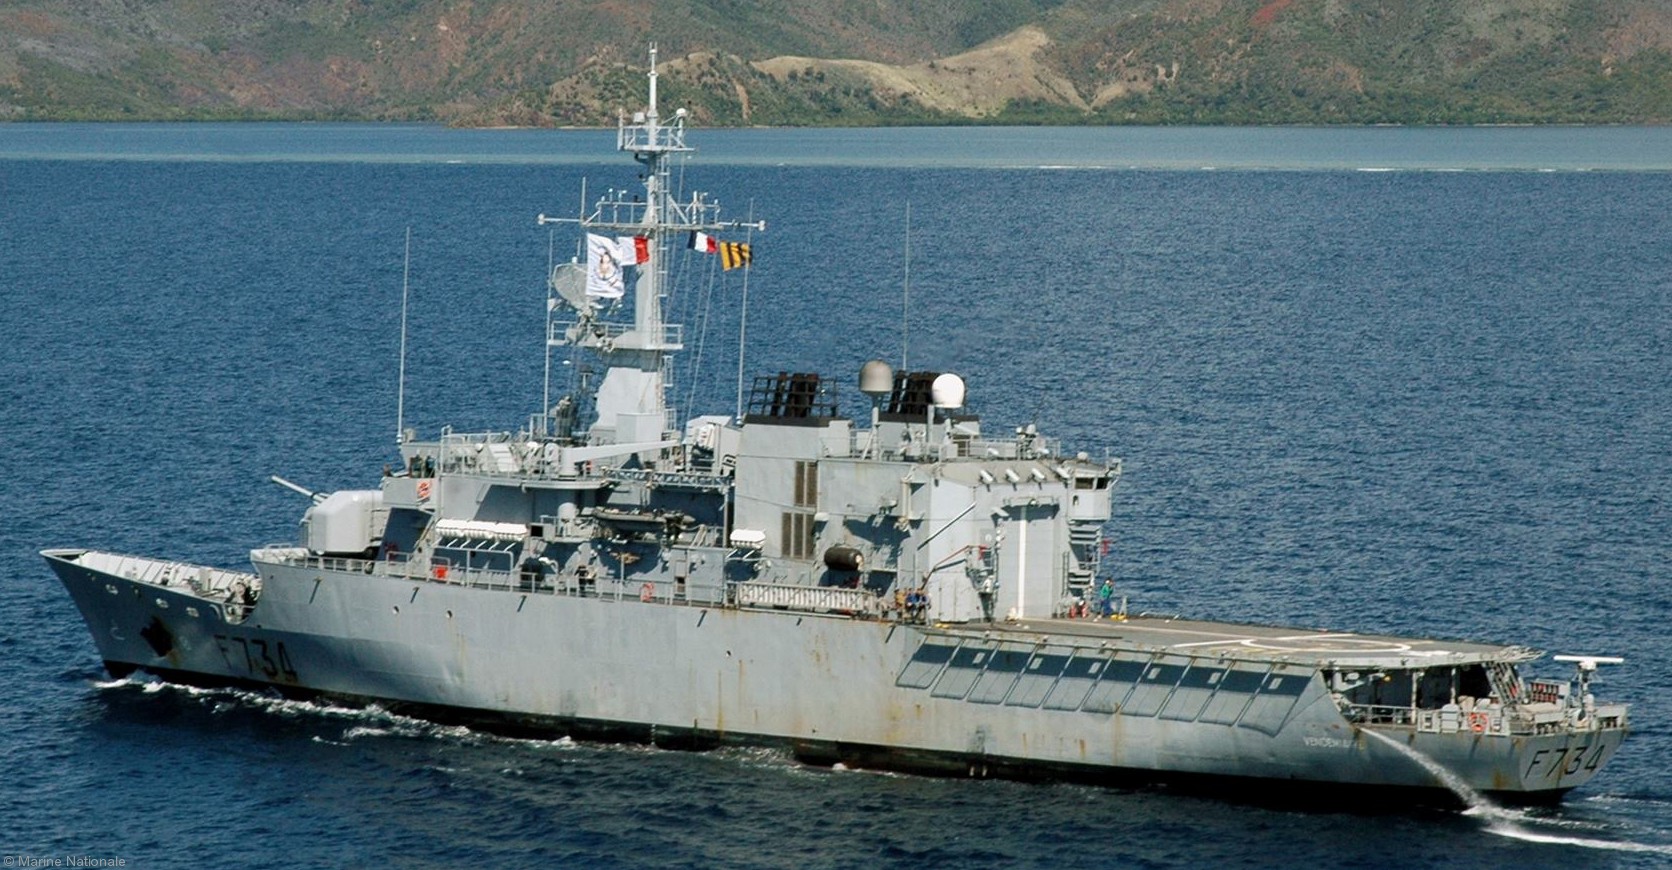 f-734 fs vendemiaire floreal class frigate french navy fregate surveillance marine nationale 04x noumea new caledonia